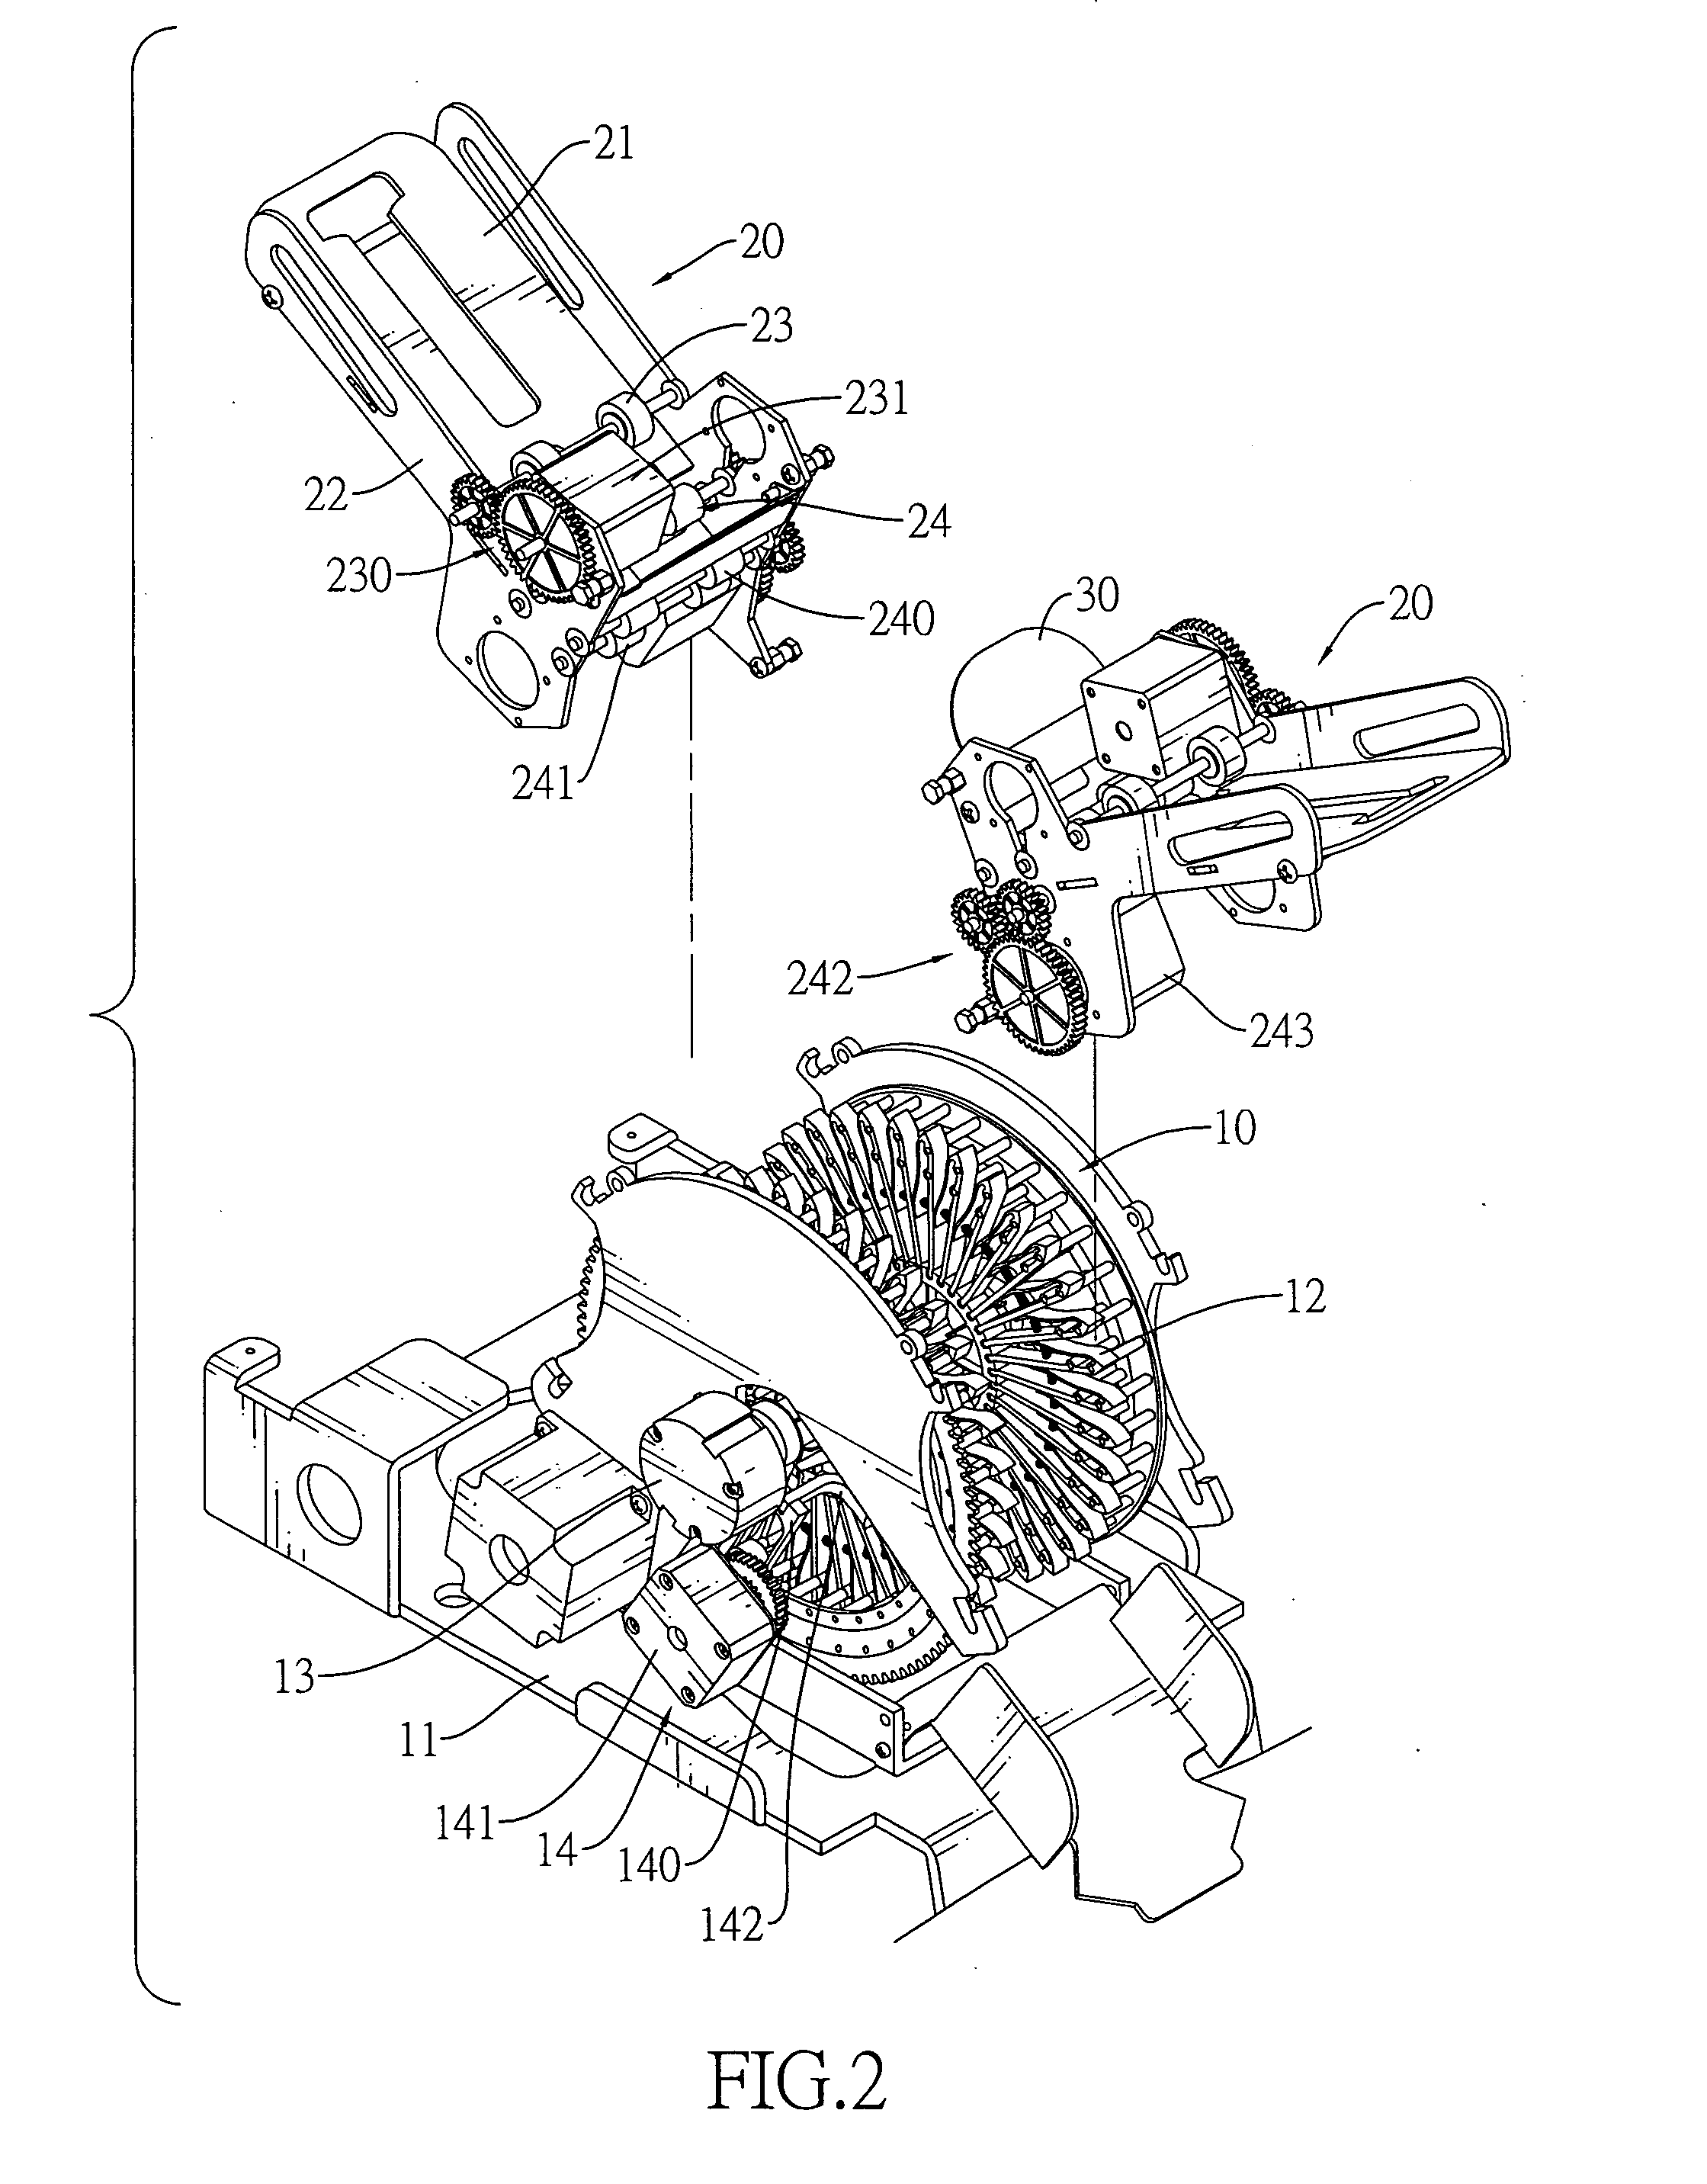 Multiple-inlet shuffling machine